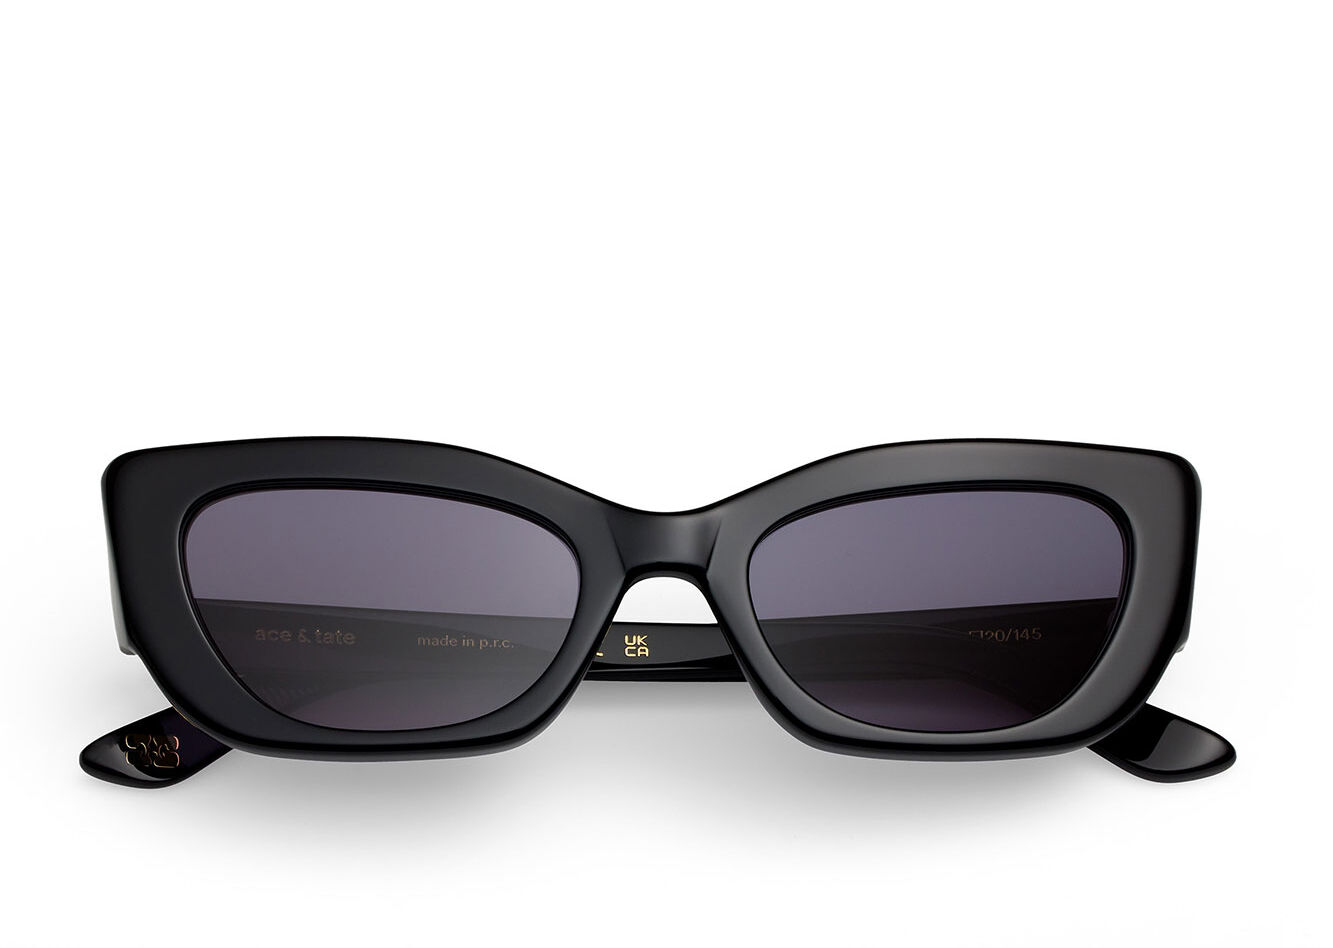 GANNI x Ace & Tate Black Sadie solglasögon, Acetate, in colour Black - 1 - GANNI